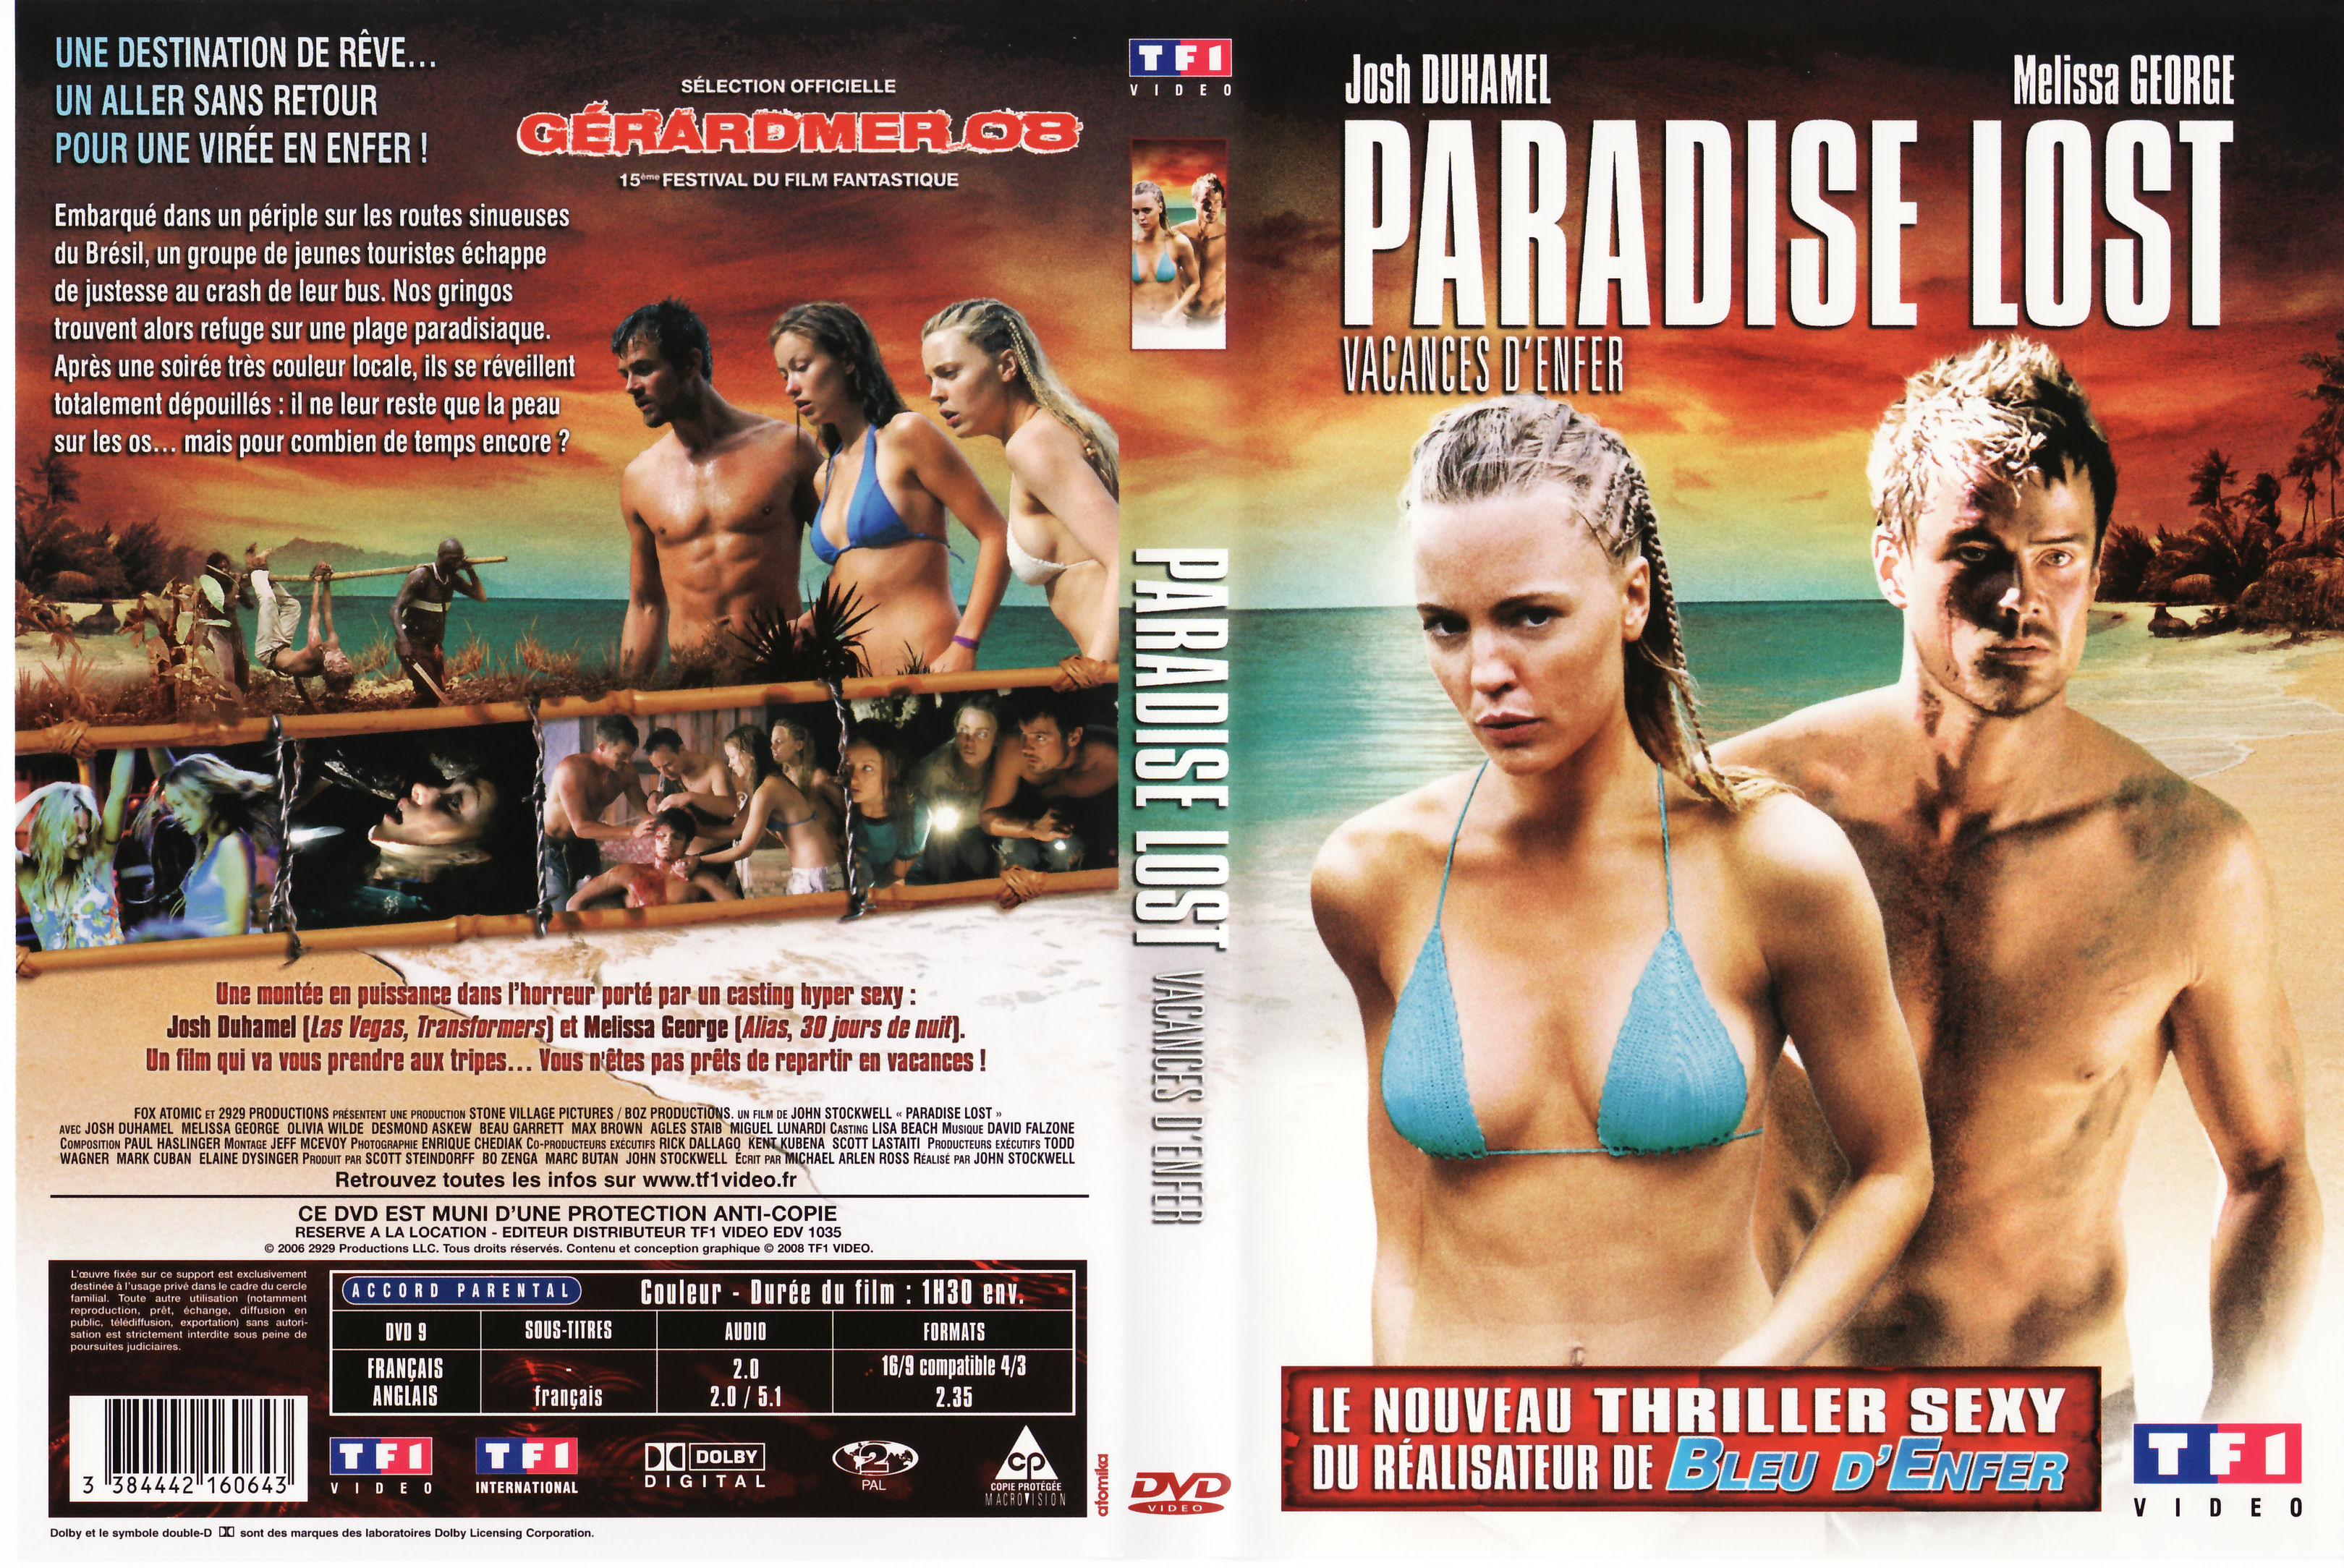 Jaquette DVD Paradise lost